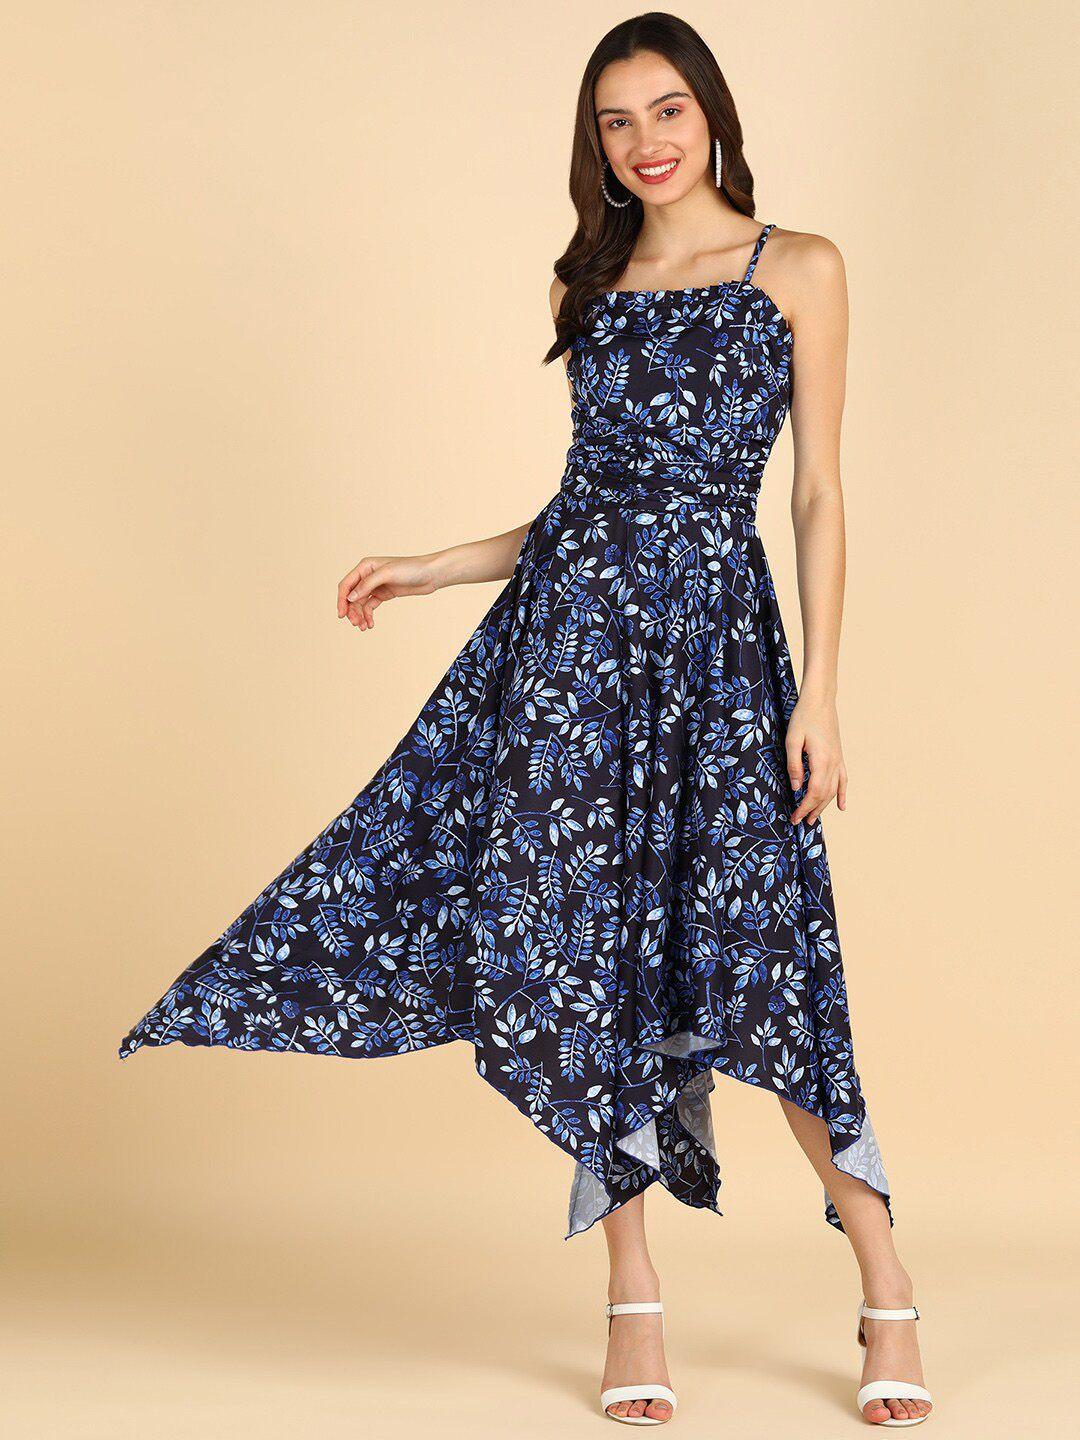 znx clothing blue floral print maxi dress